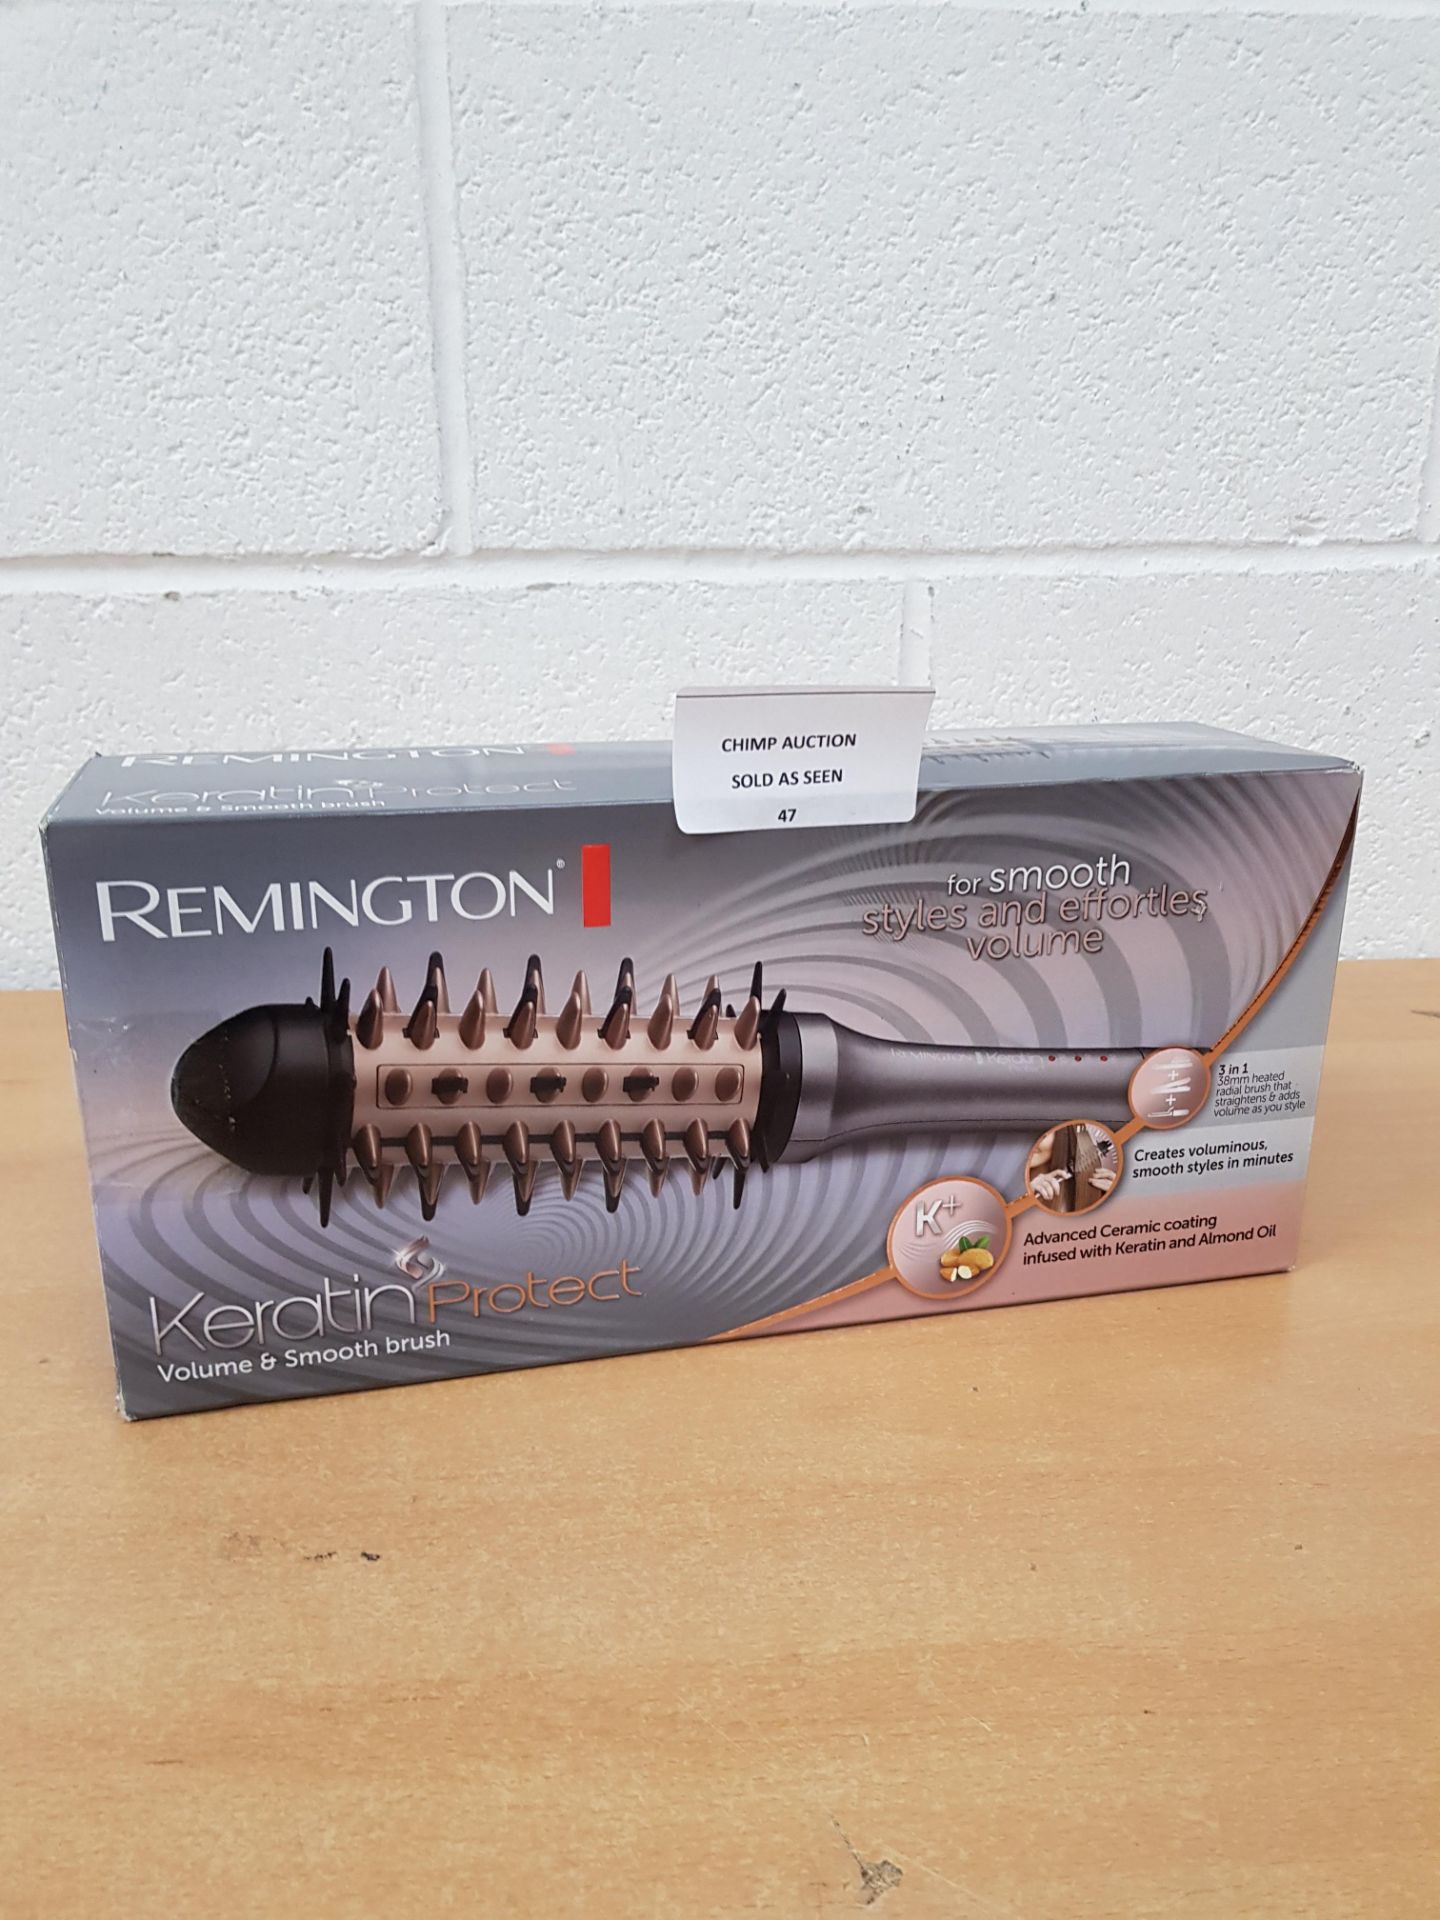 Remington CB7A136 Keratin Protect Hair Brush, 3-in-1 Straightener